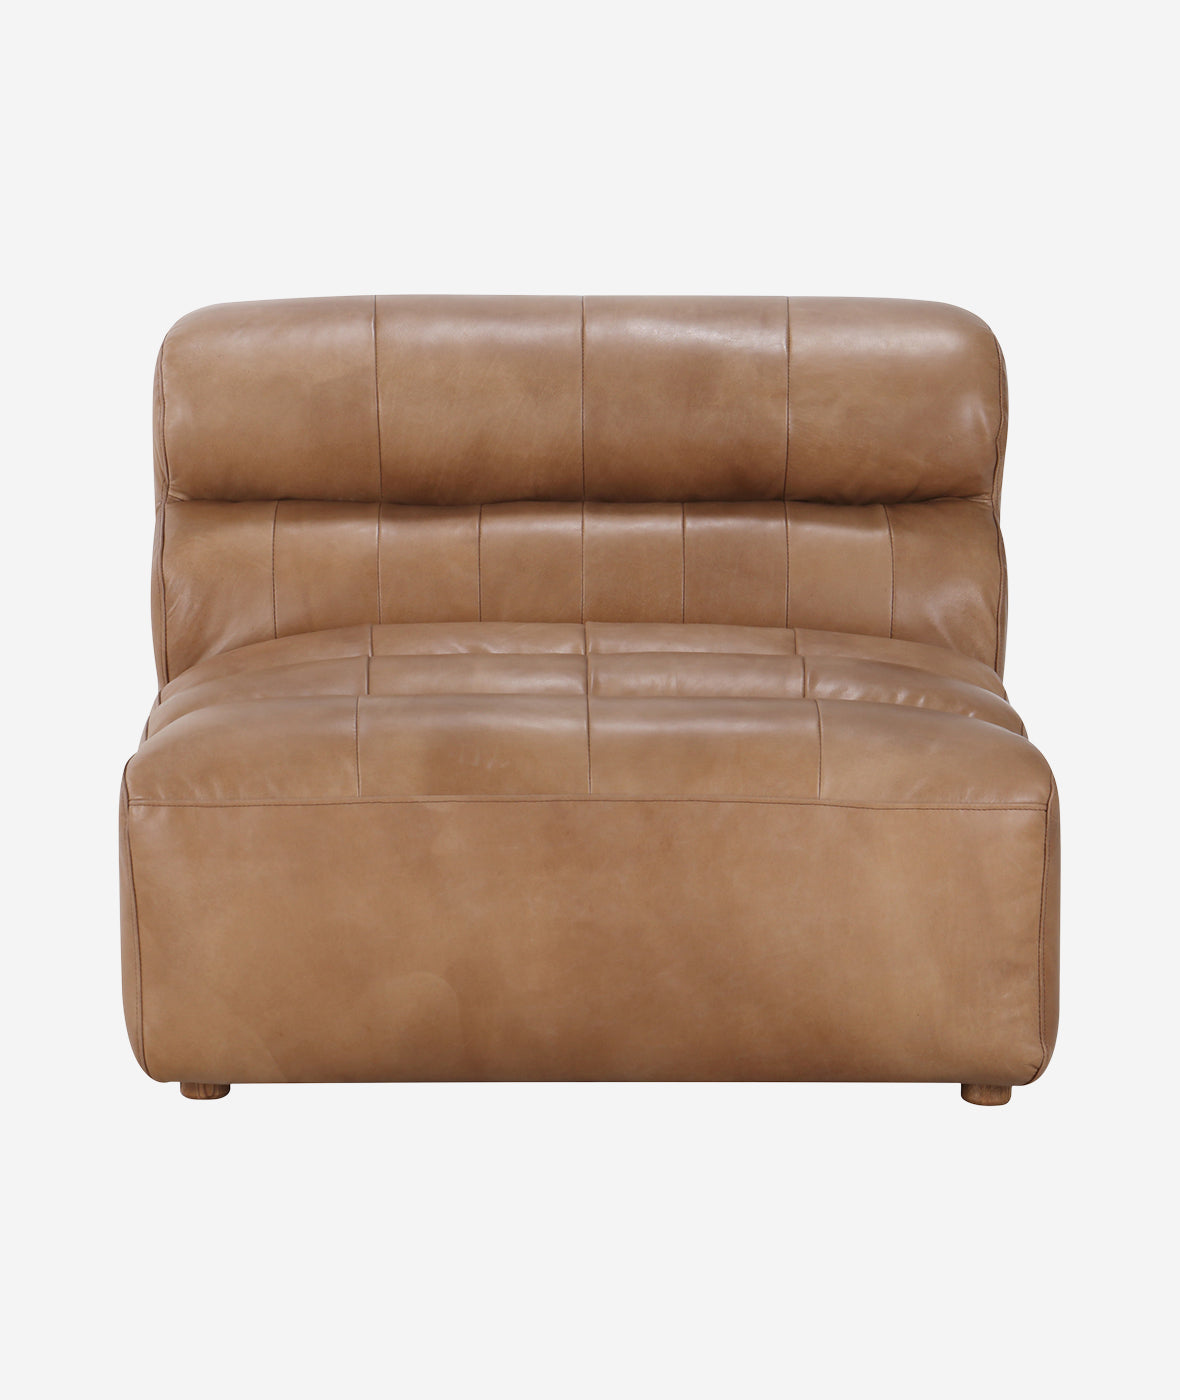 Ramsay Leather Slipper Chair - Tan